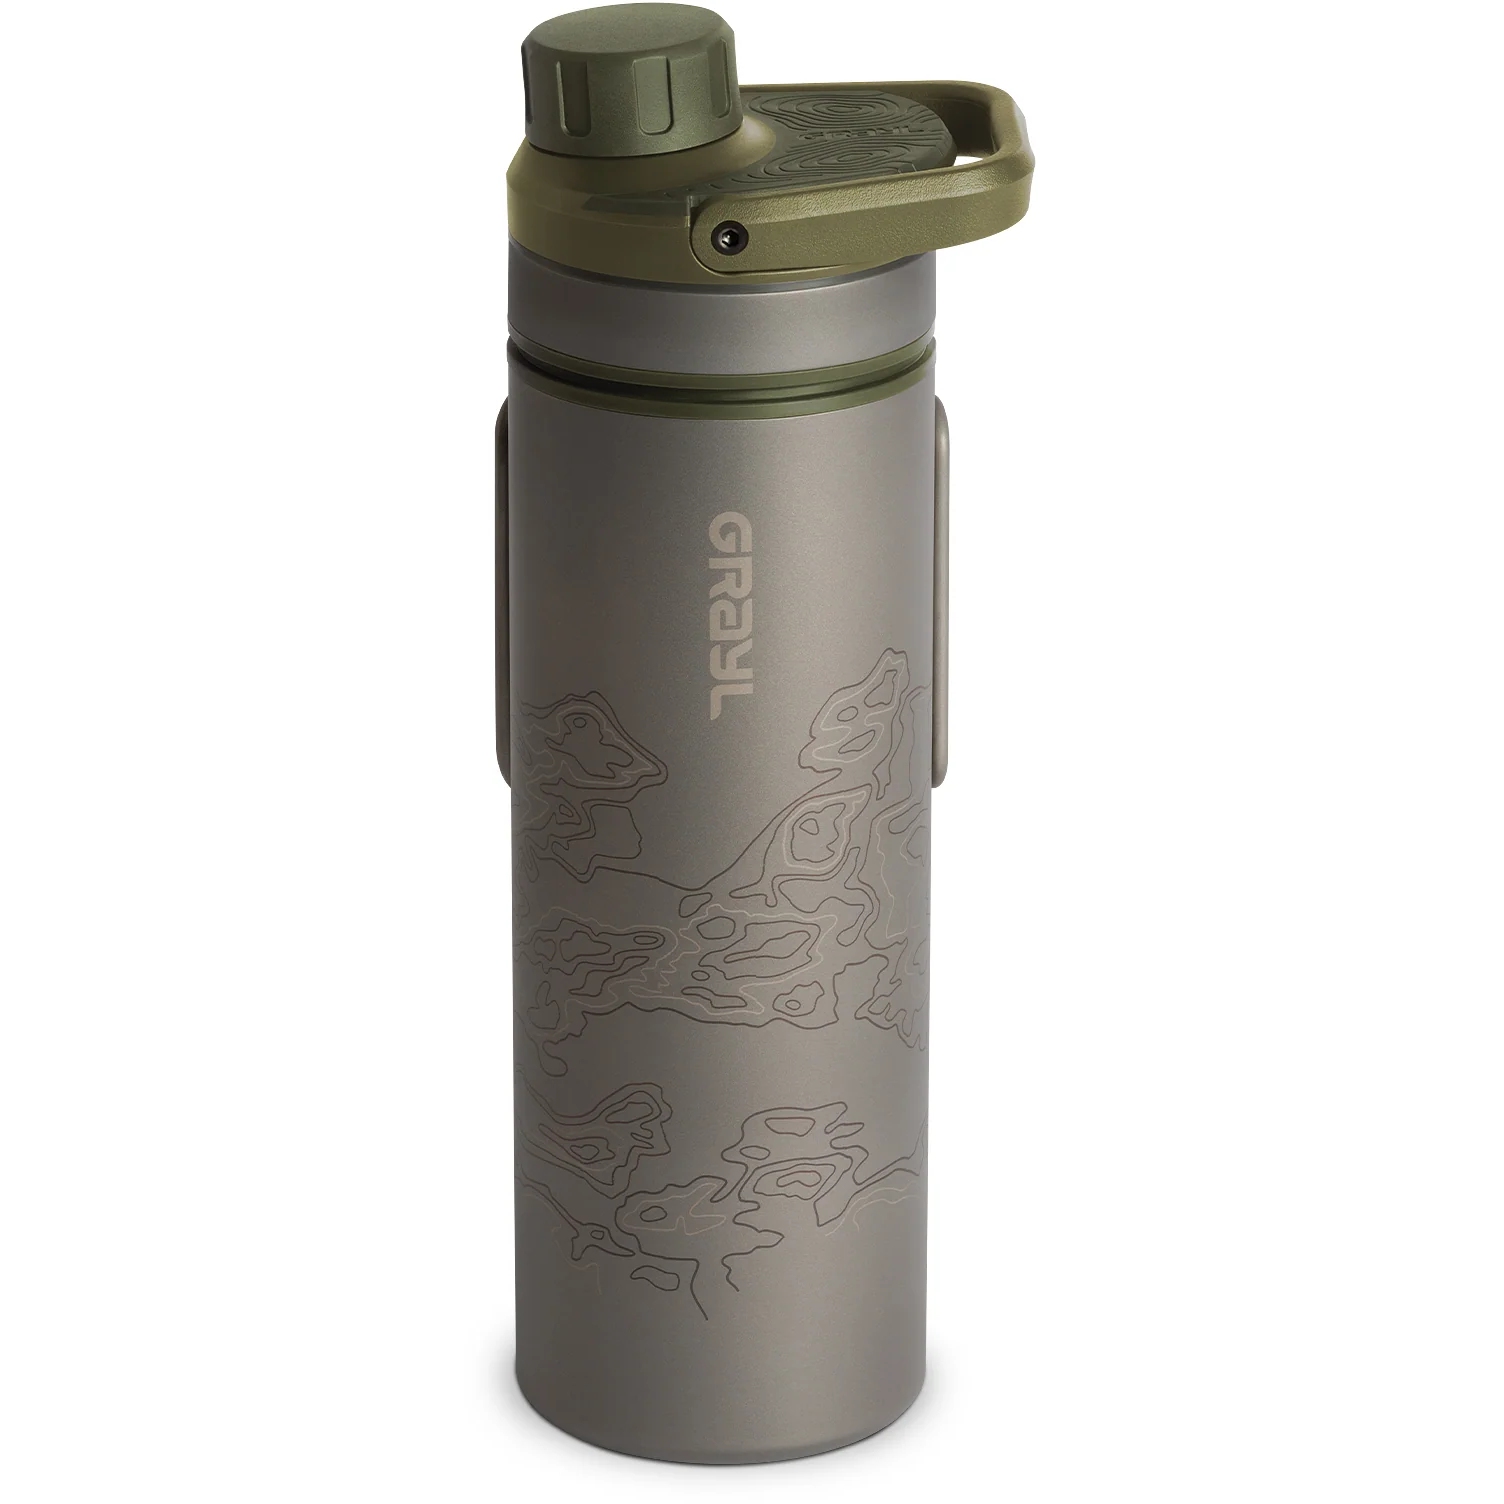 Productfoto van Grayl UltraPress Purifier Titanium Fles met Waterfilter - 500ml - Olive Drab